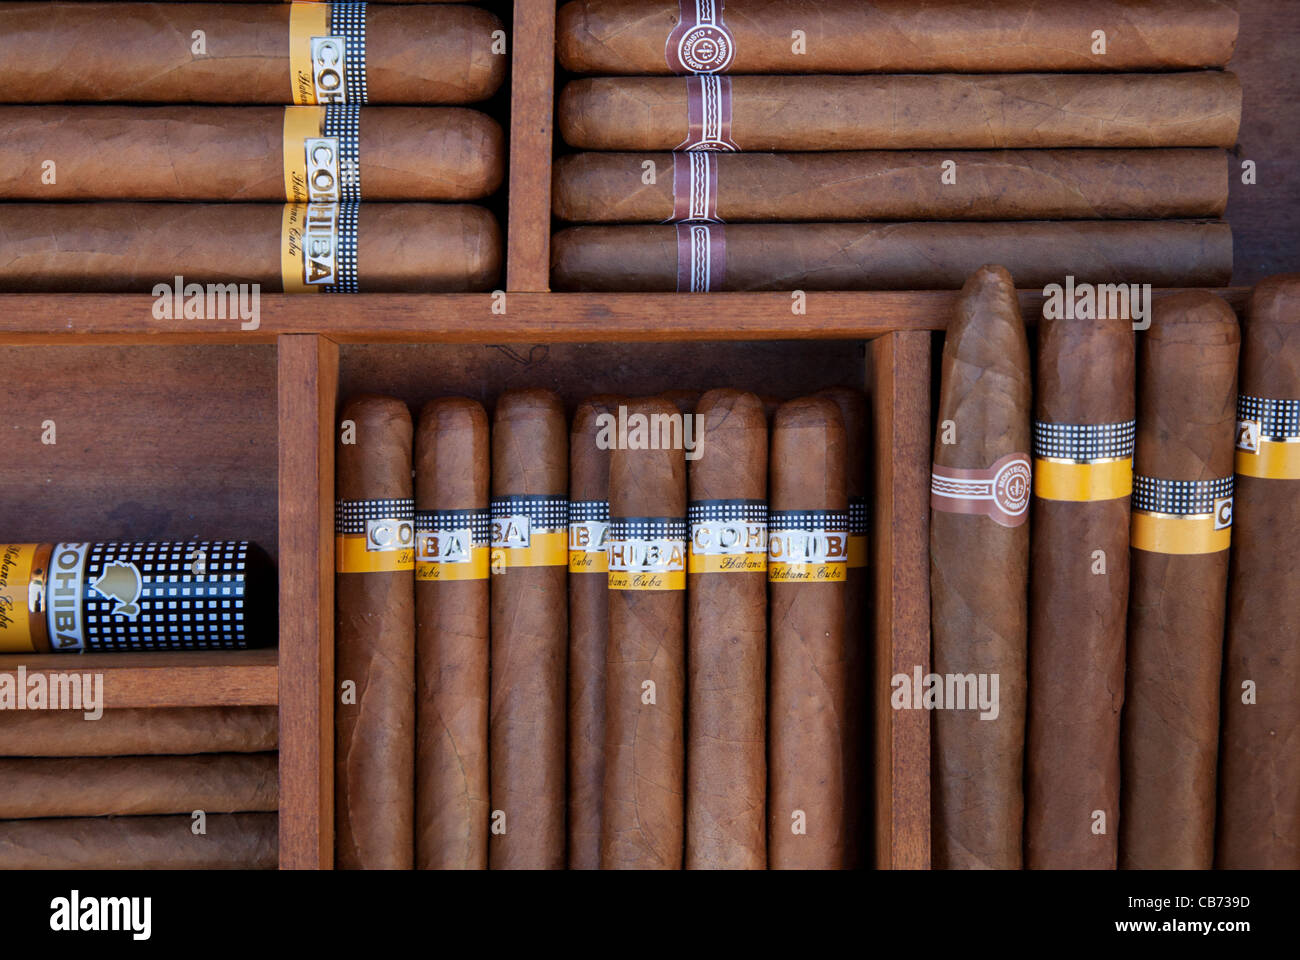 Cigars cohiba cuba havana hi-res stock photography and images - Alamy